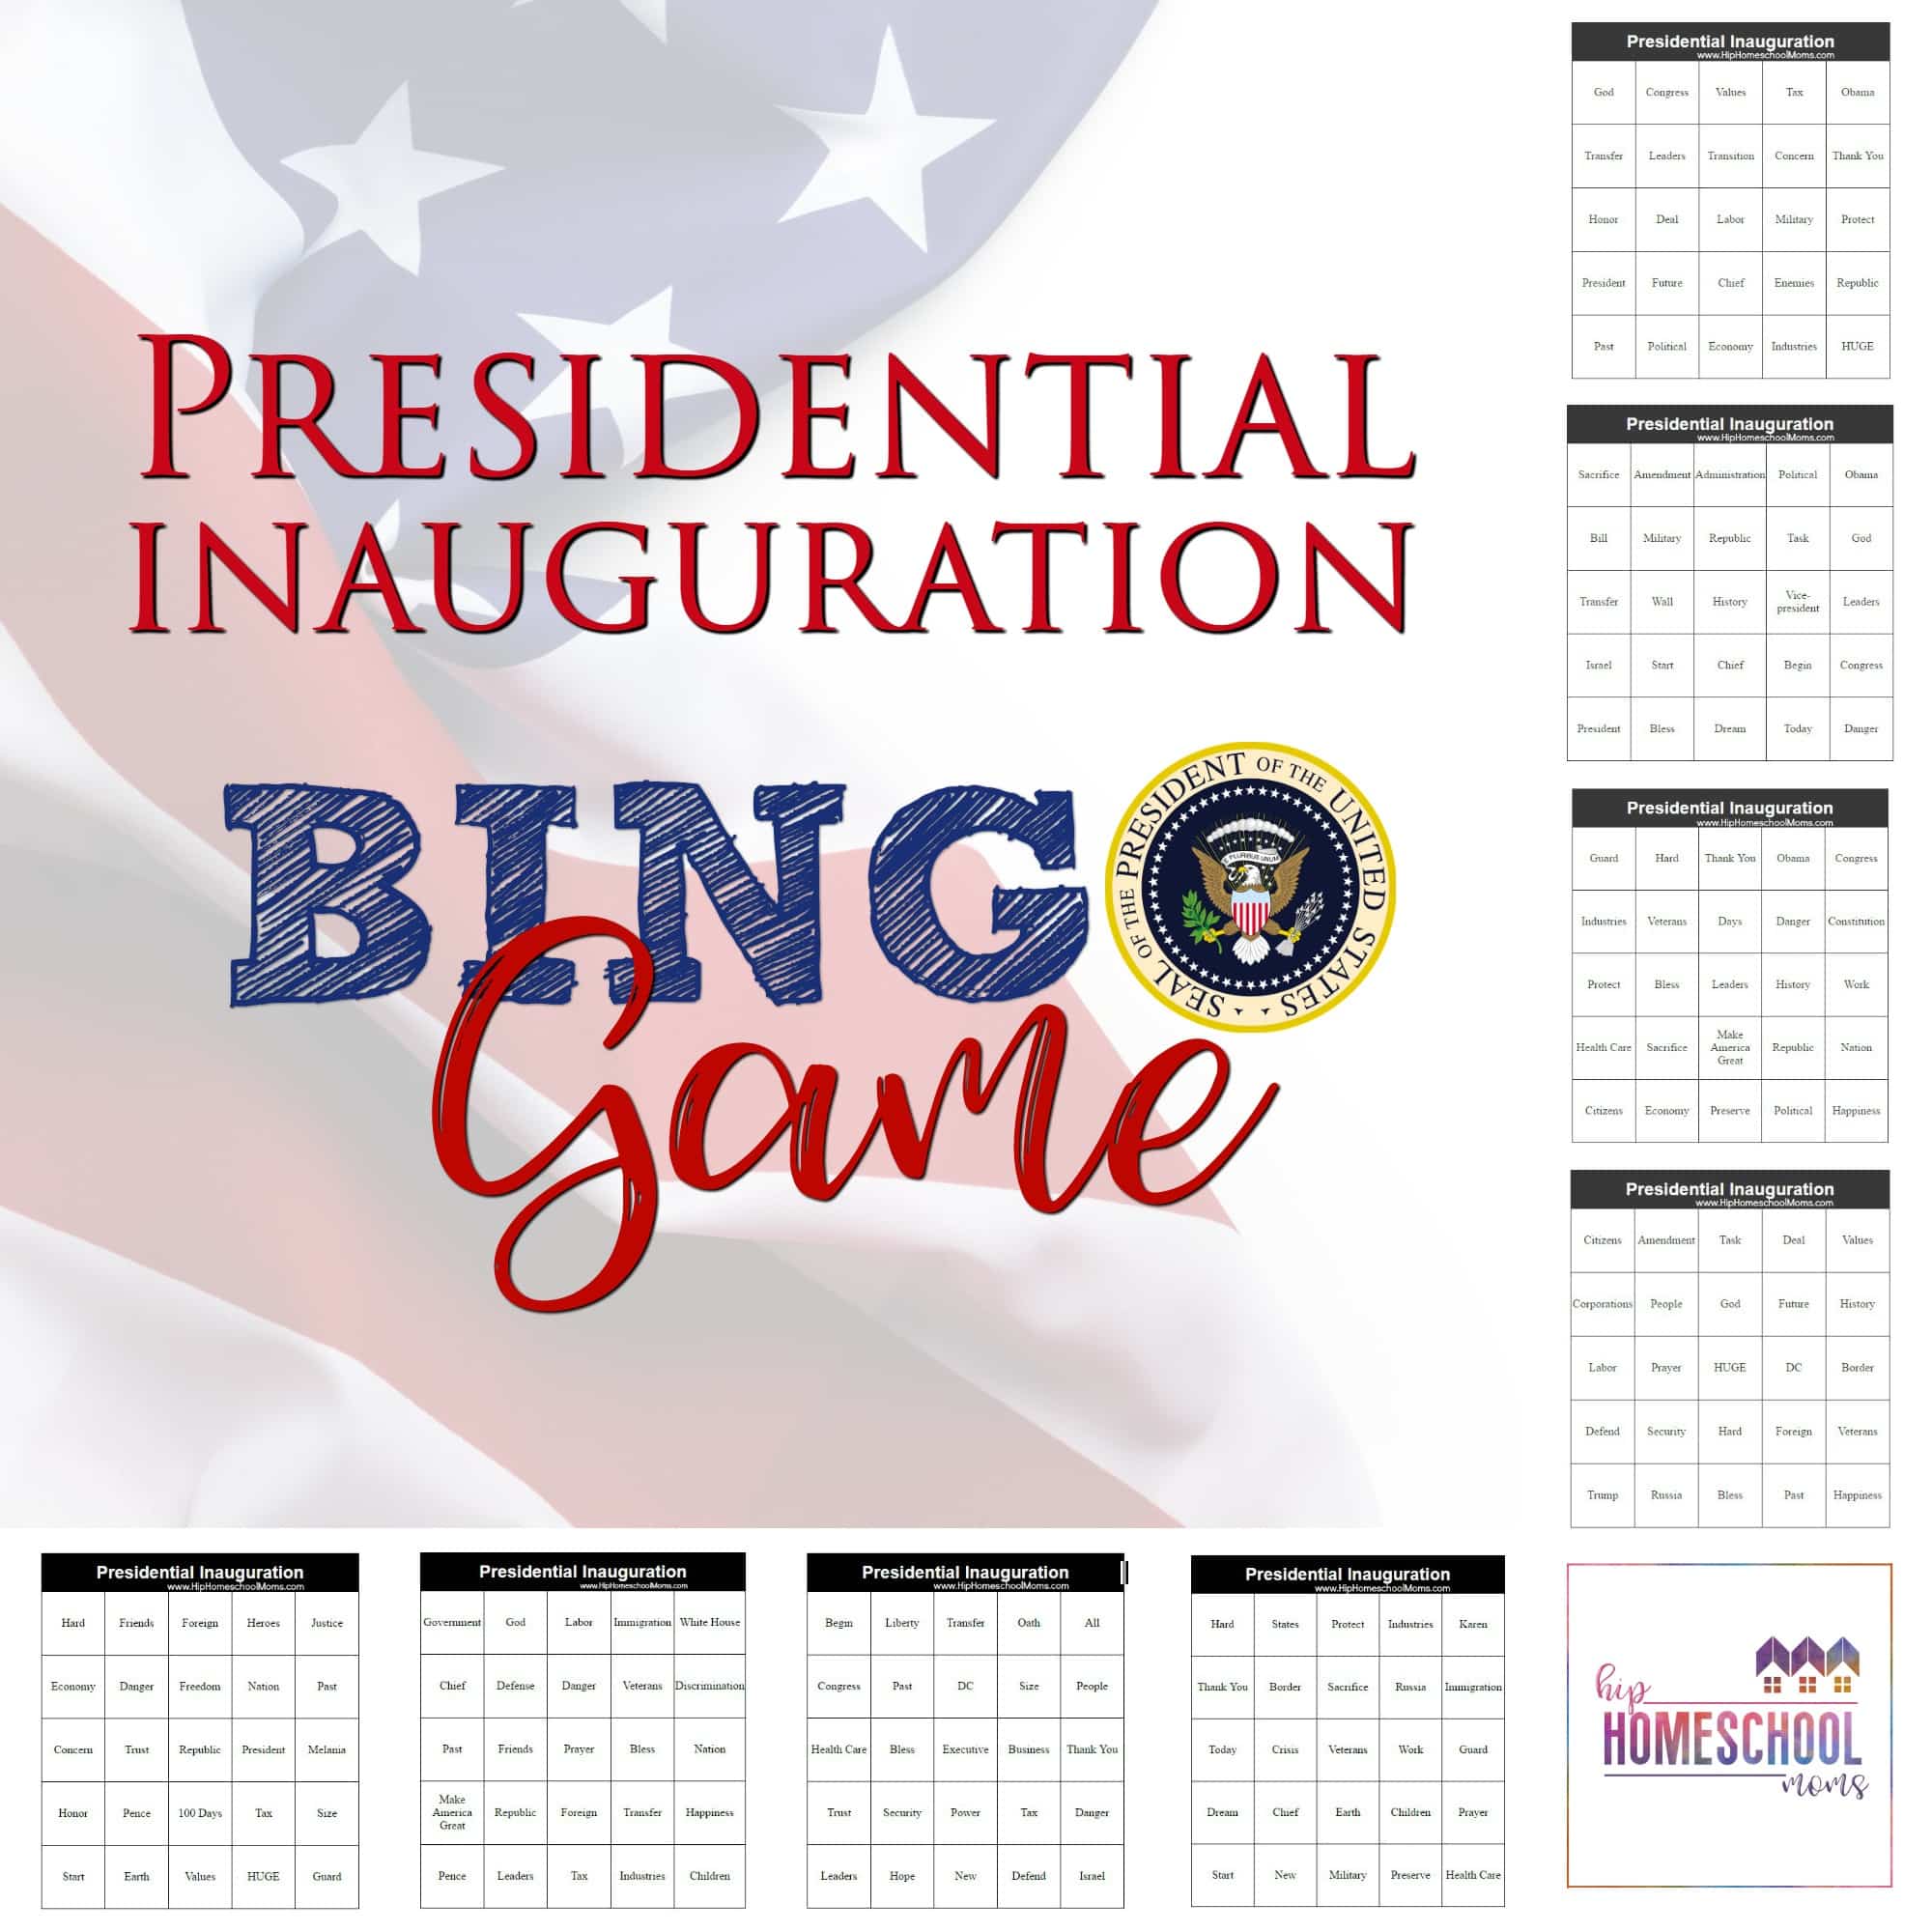 Presidential Inauguration Bingo Game Printable